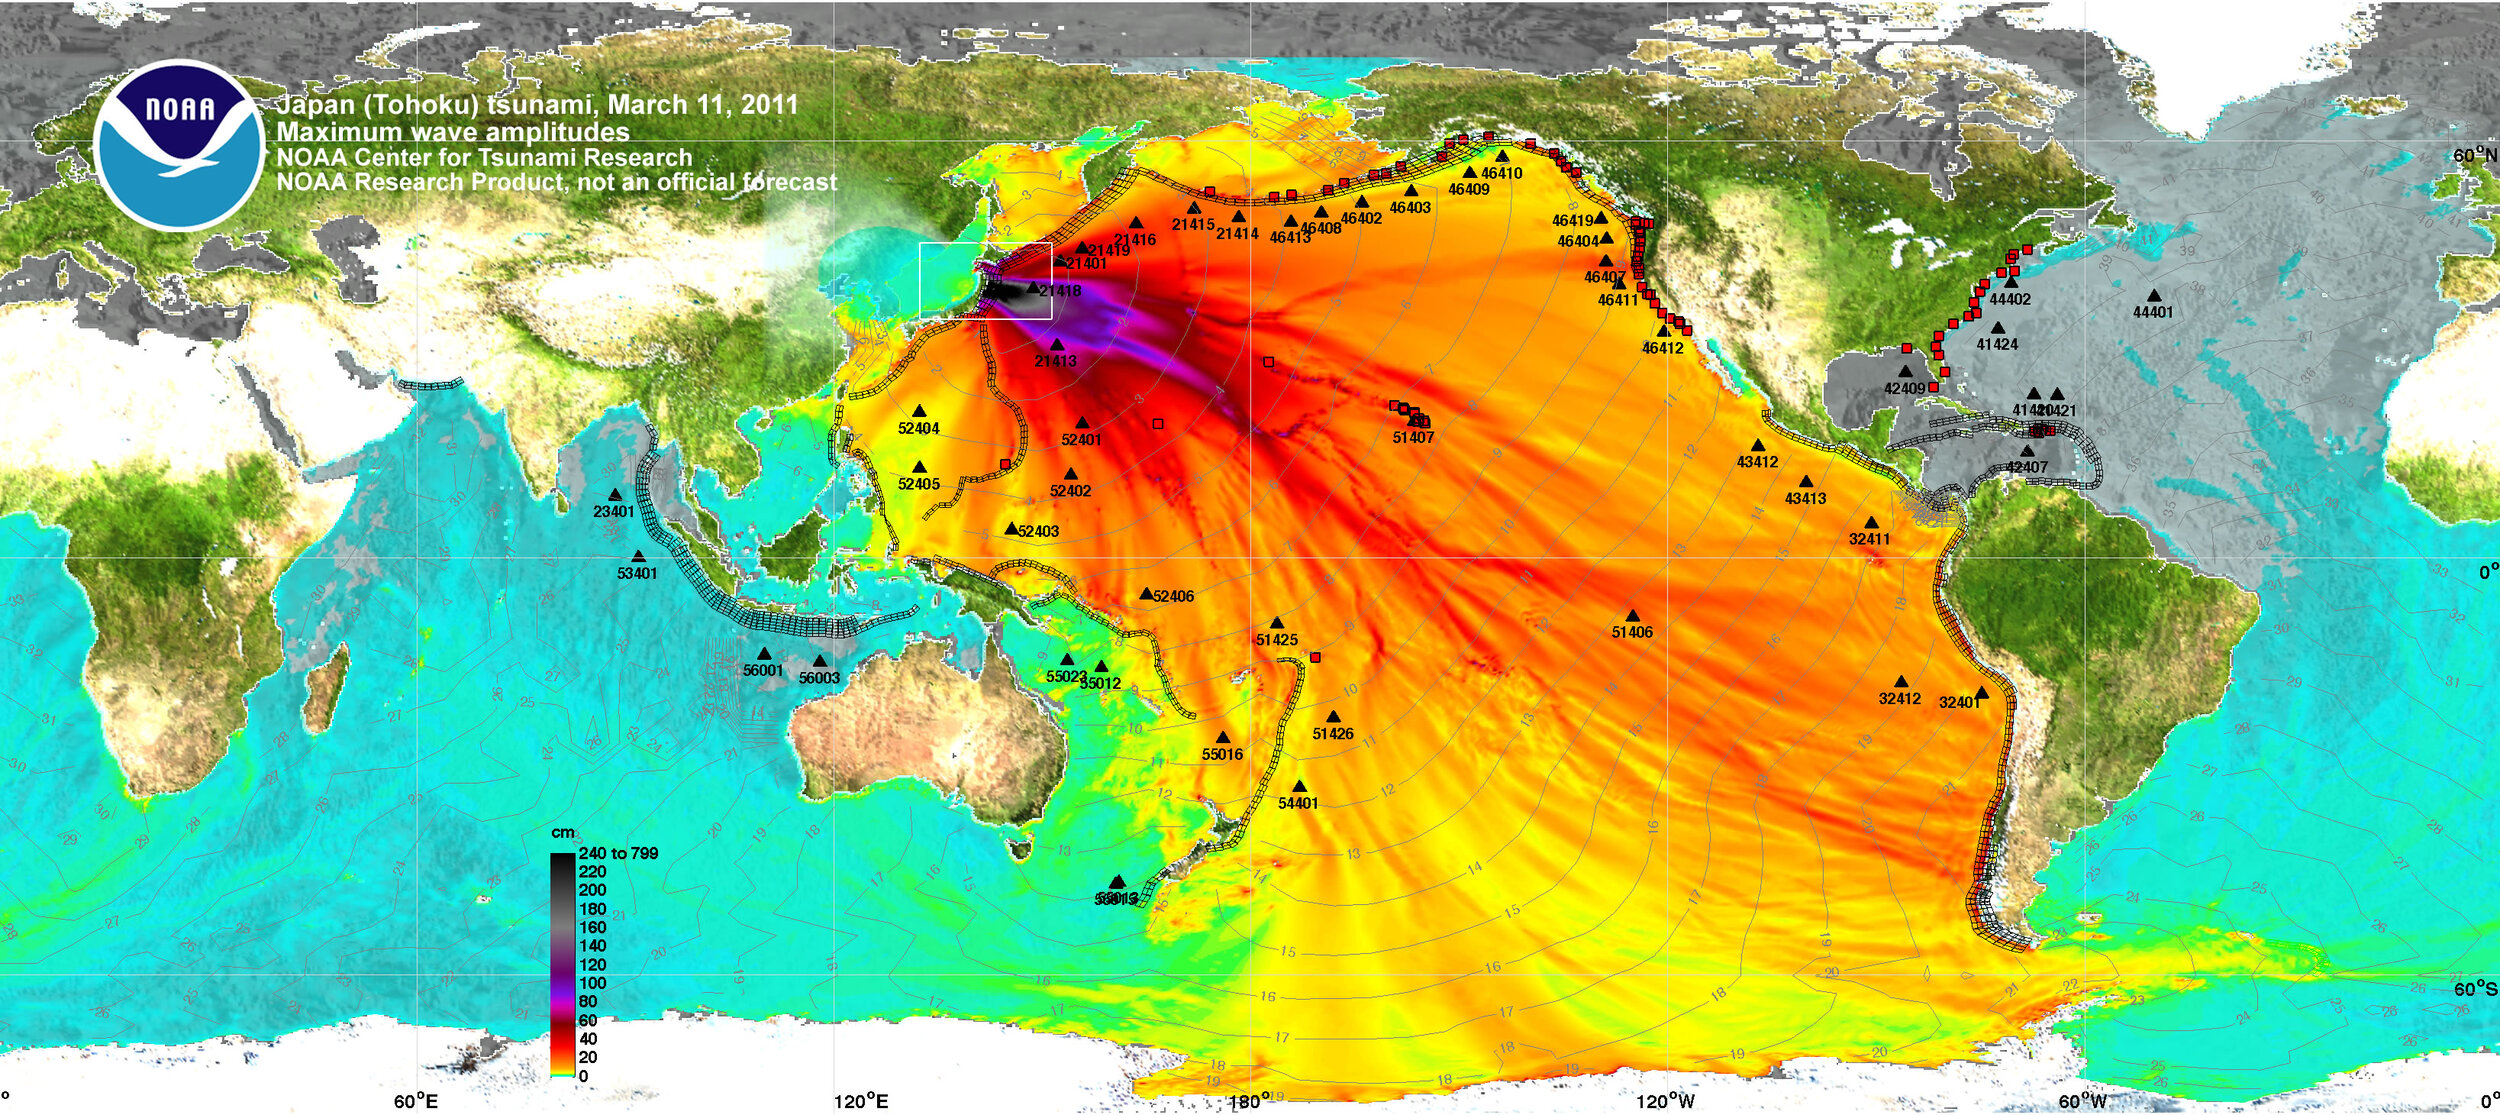 DC_NOAA_2011_data set.jpg